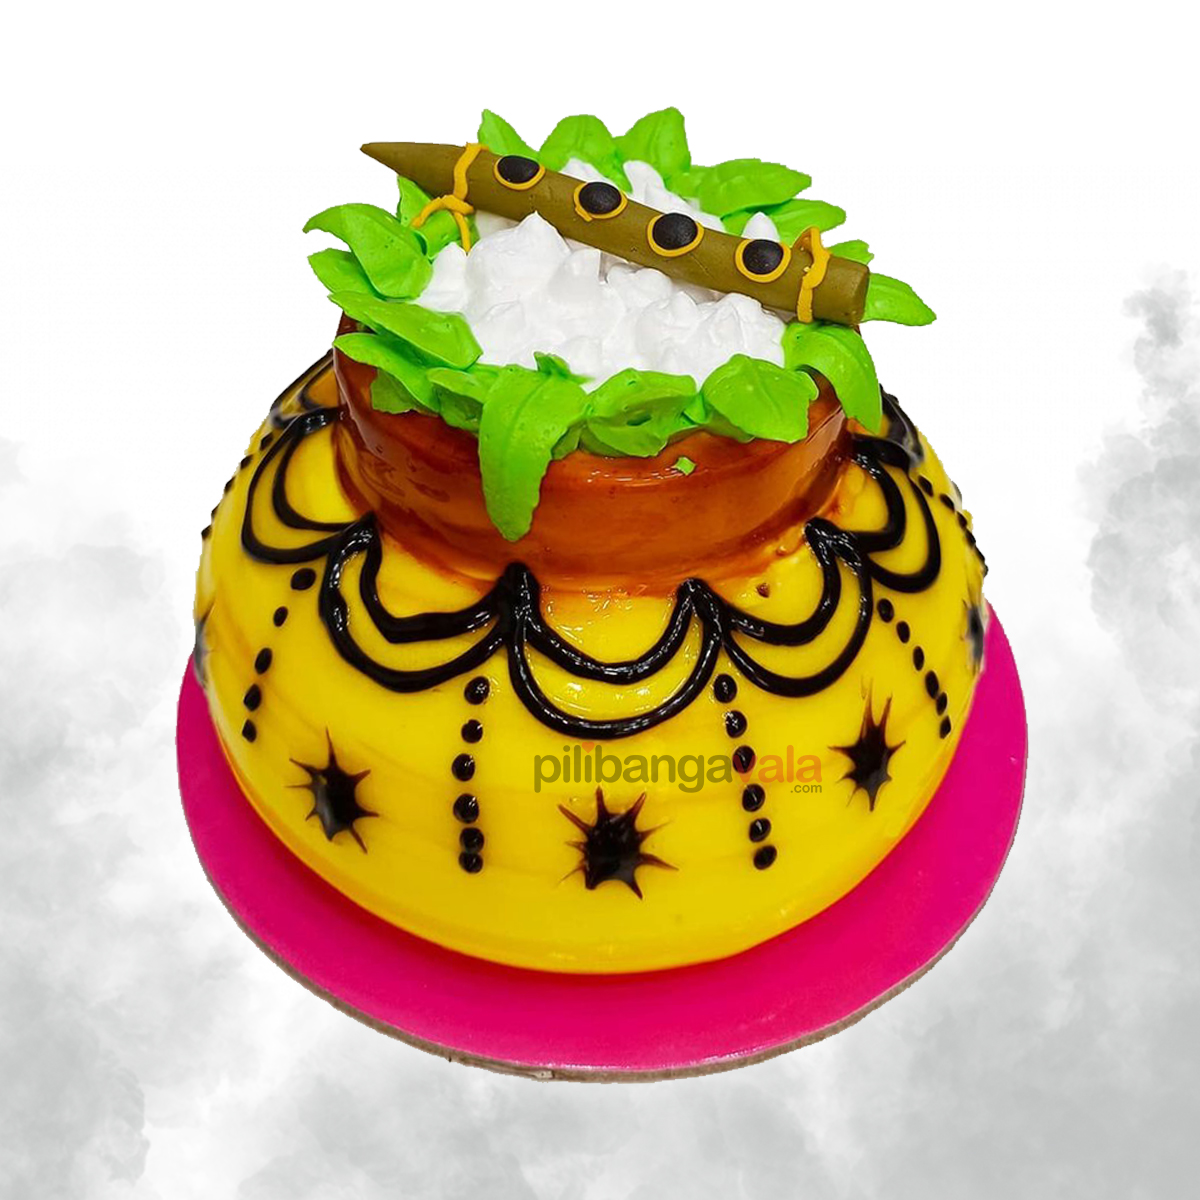 Matka Theme Cake | bakehoney.com